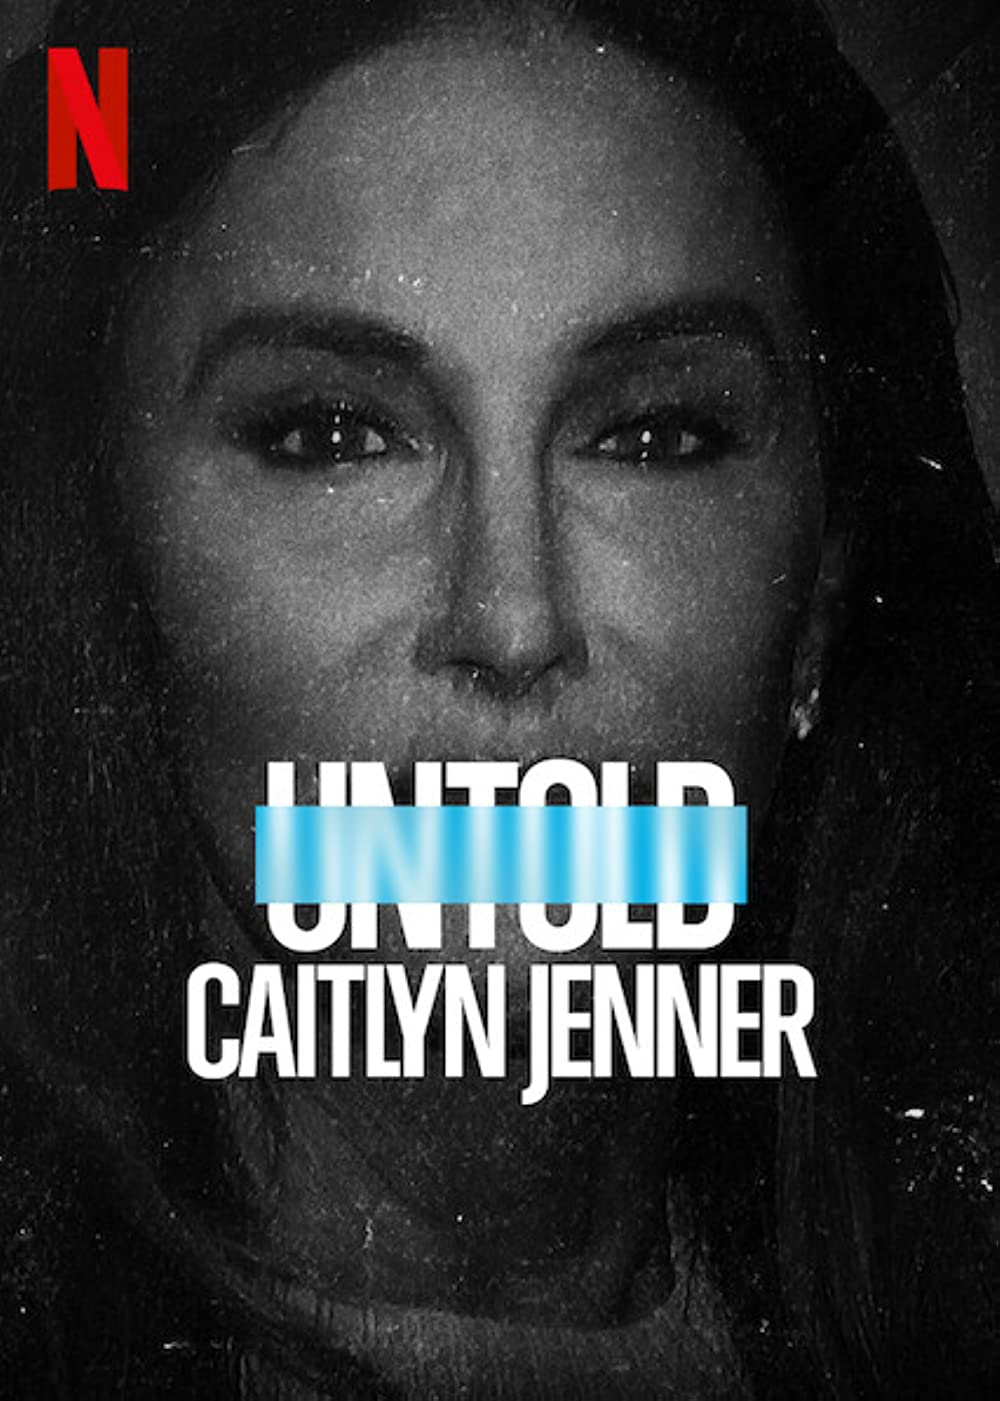 Filmbeschreibung zu Untold: Caitlyn Jenner